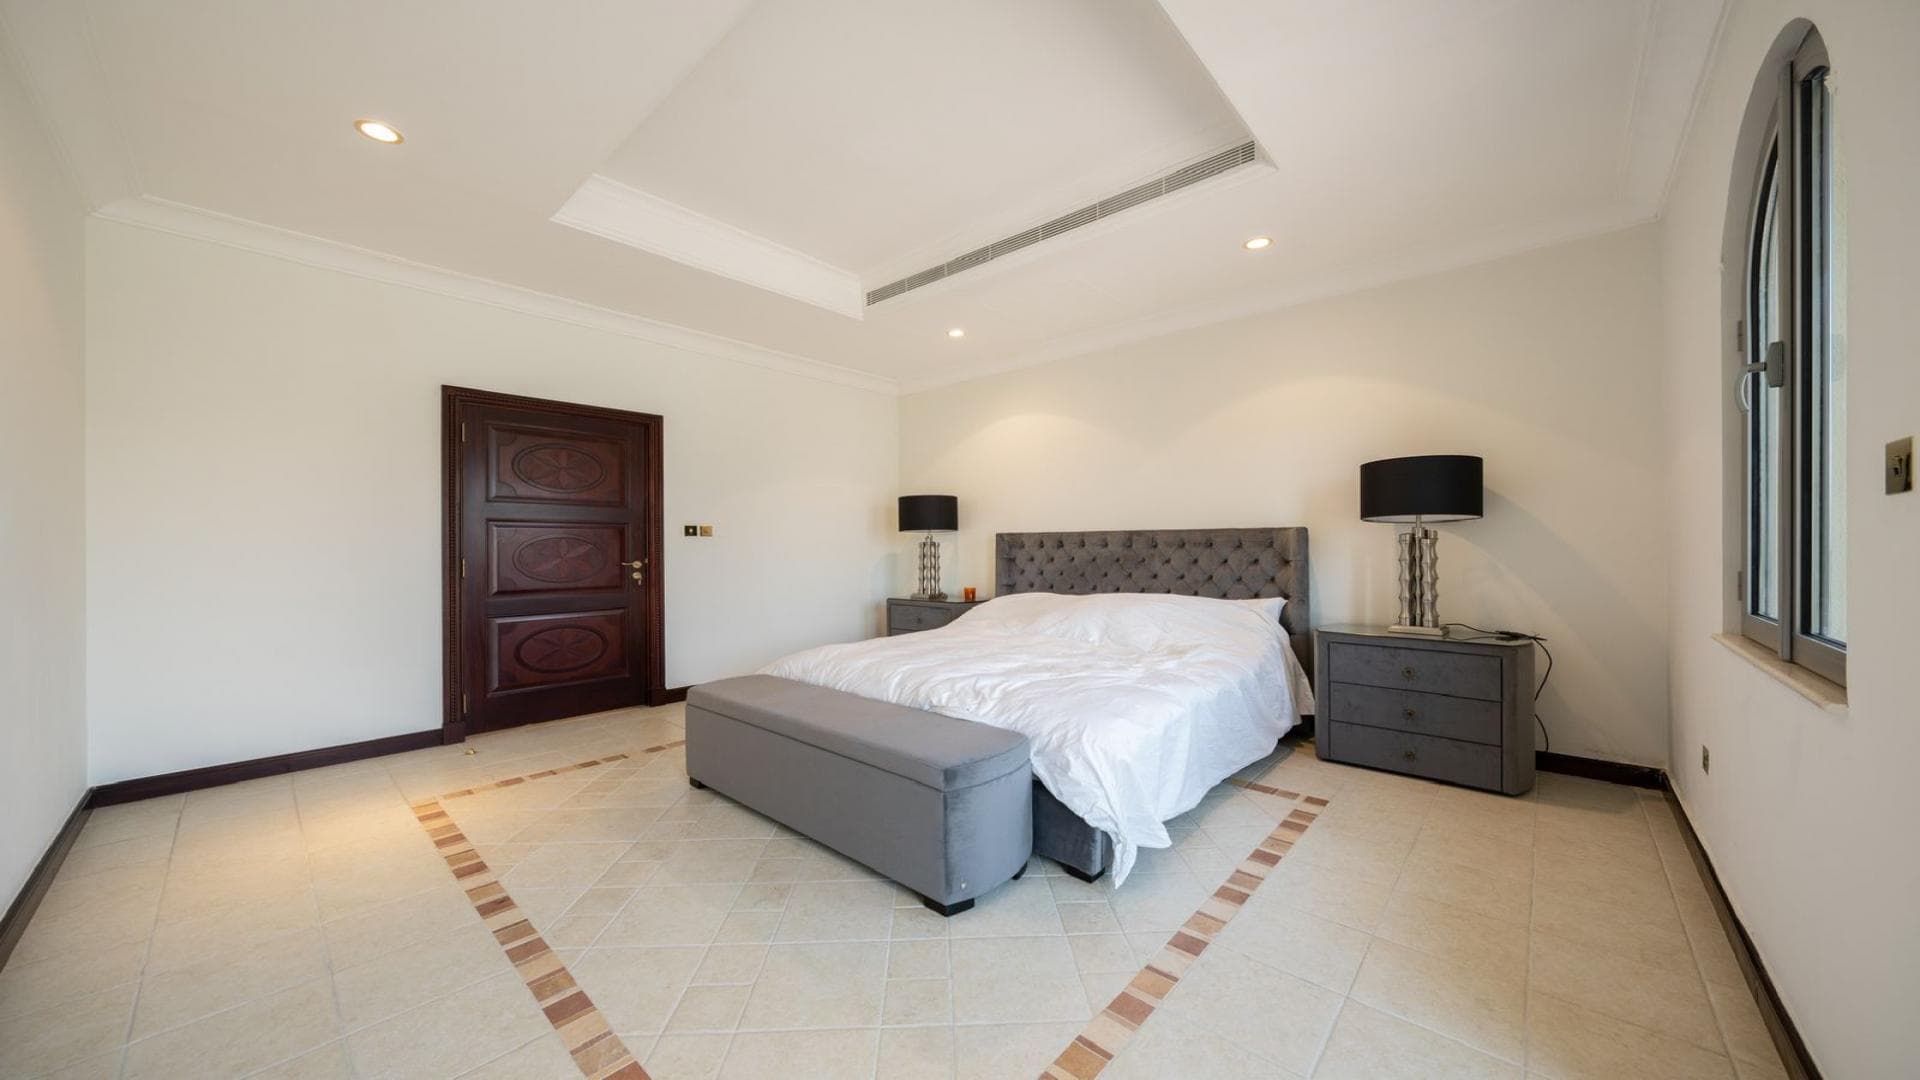 4 Bedroom Apartment For Sale Mughal Lp36896 1b30de99e5a3c100.jpeg